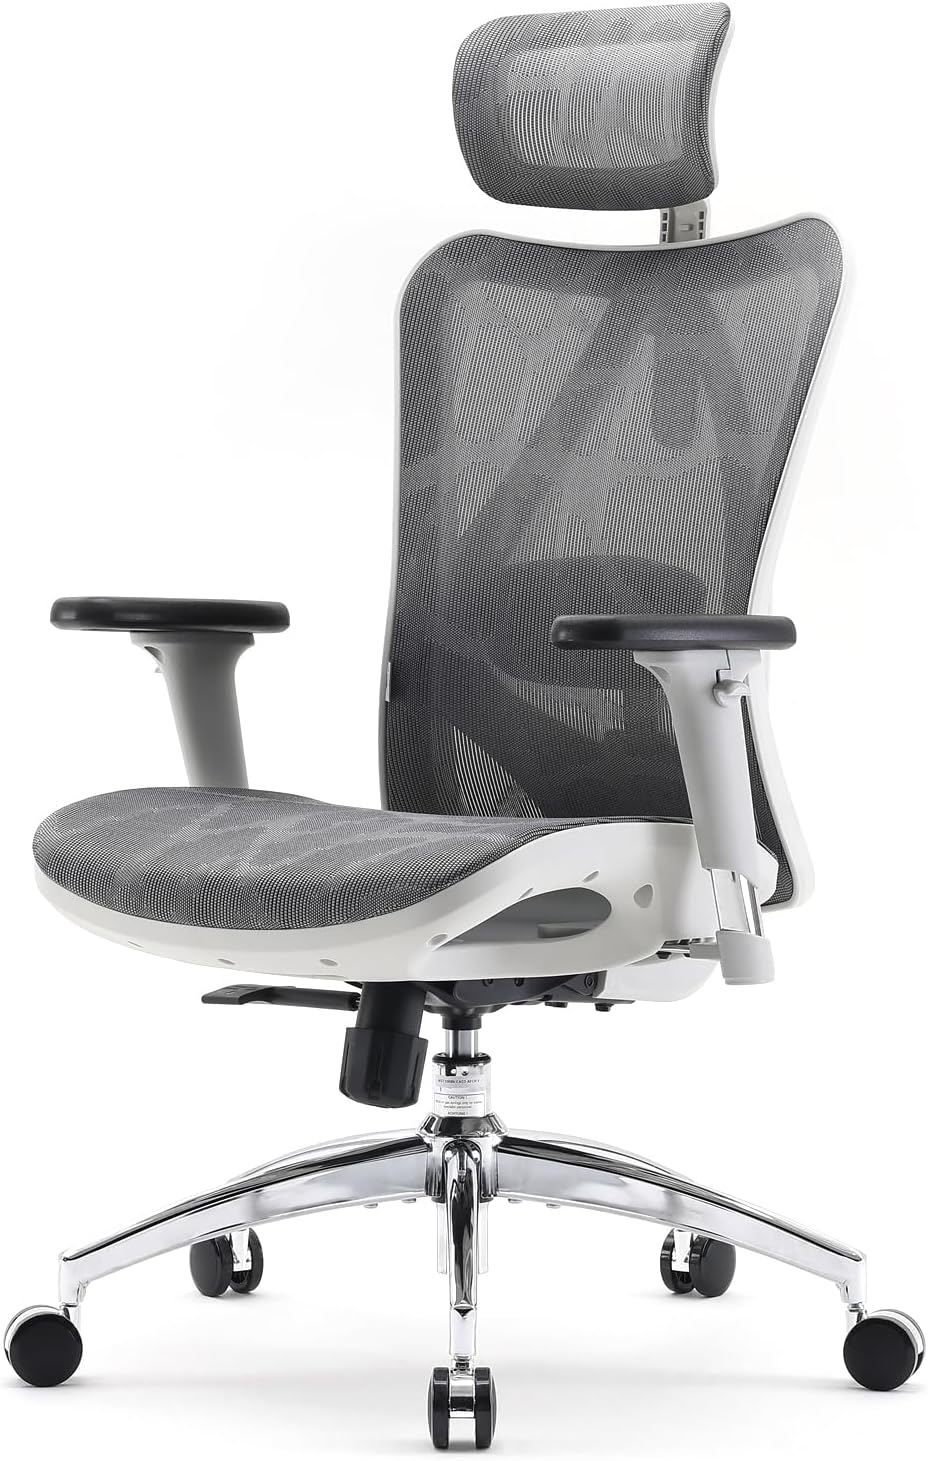 Sihoo M57 Ergonomic Chair With Legrest